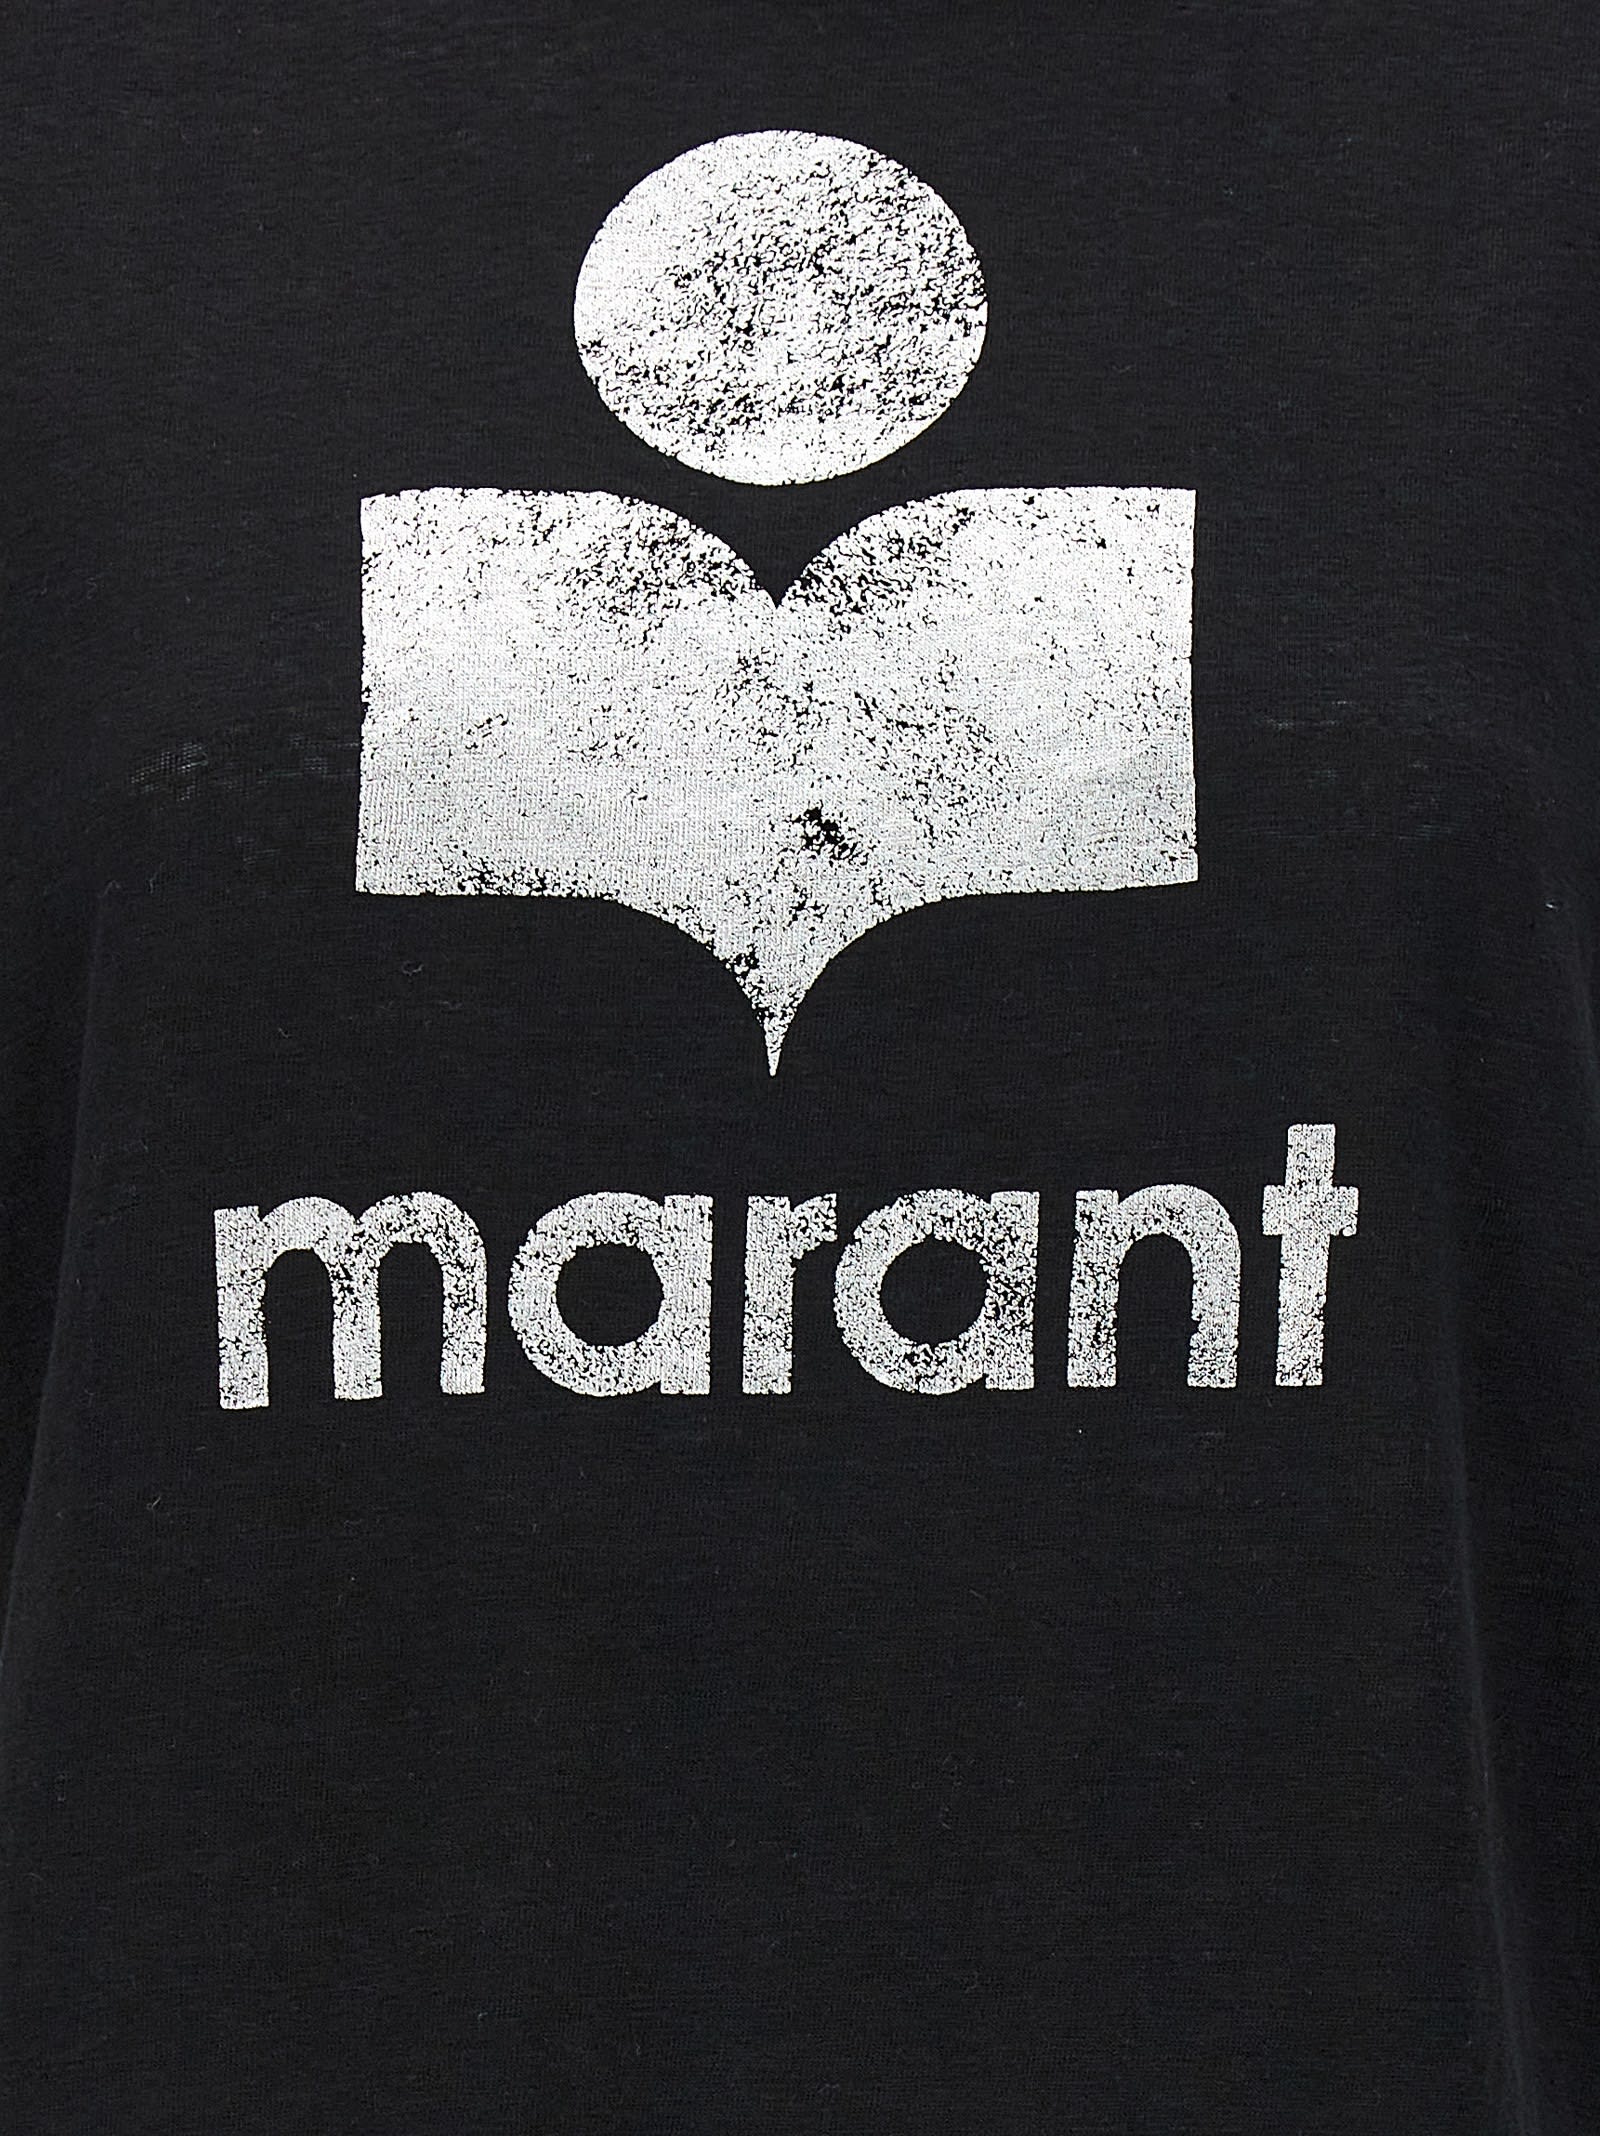 Shop Marant Etoile Zewel T-shirt In Black